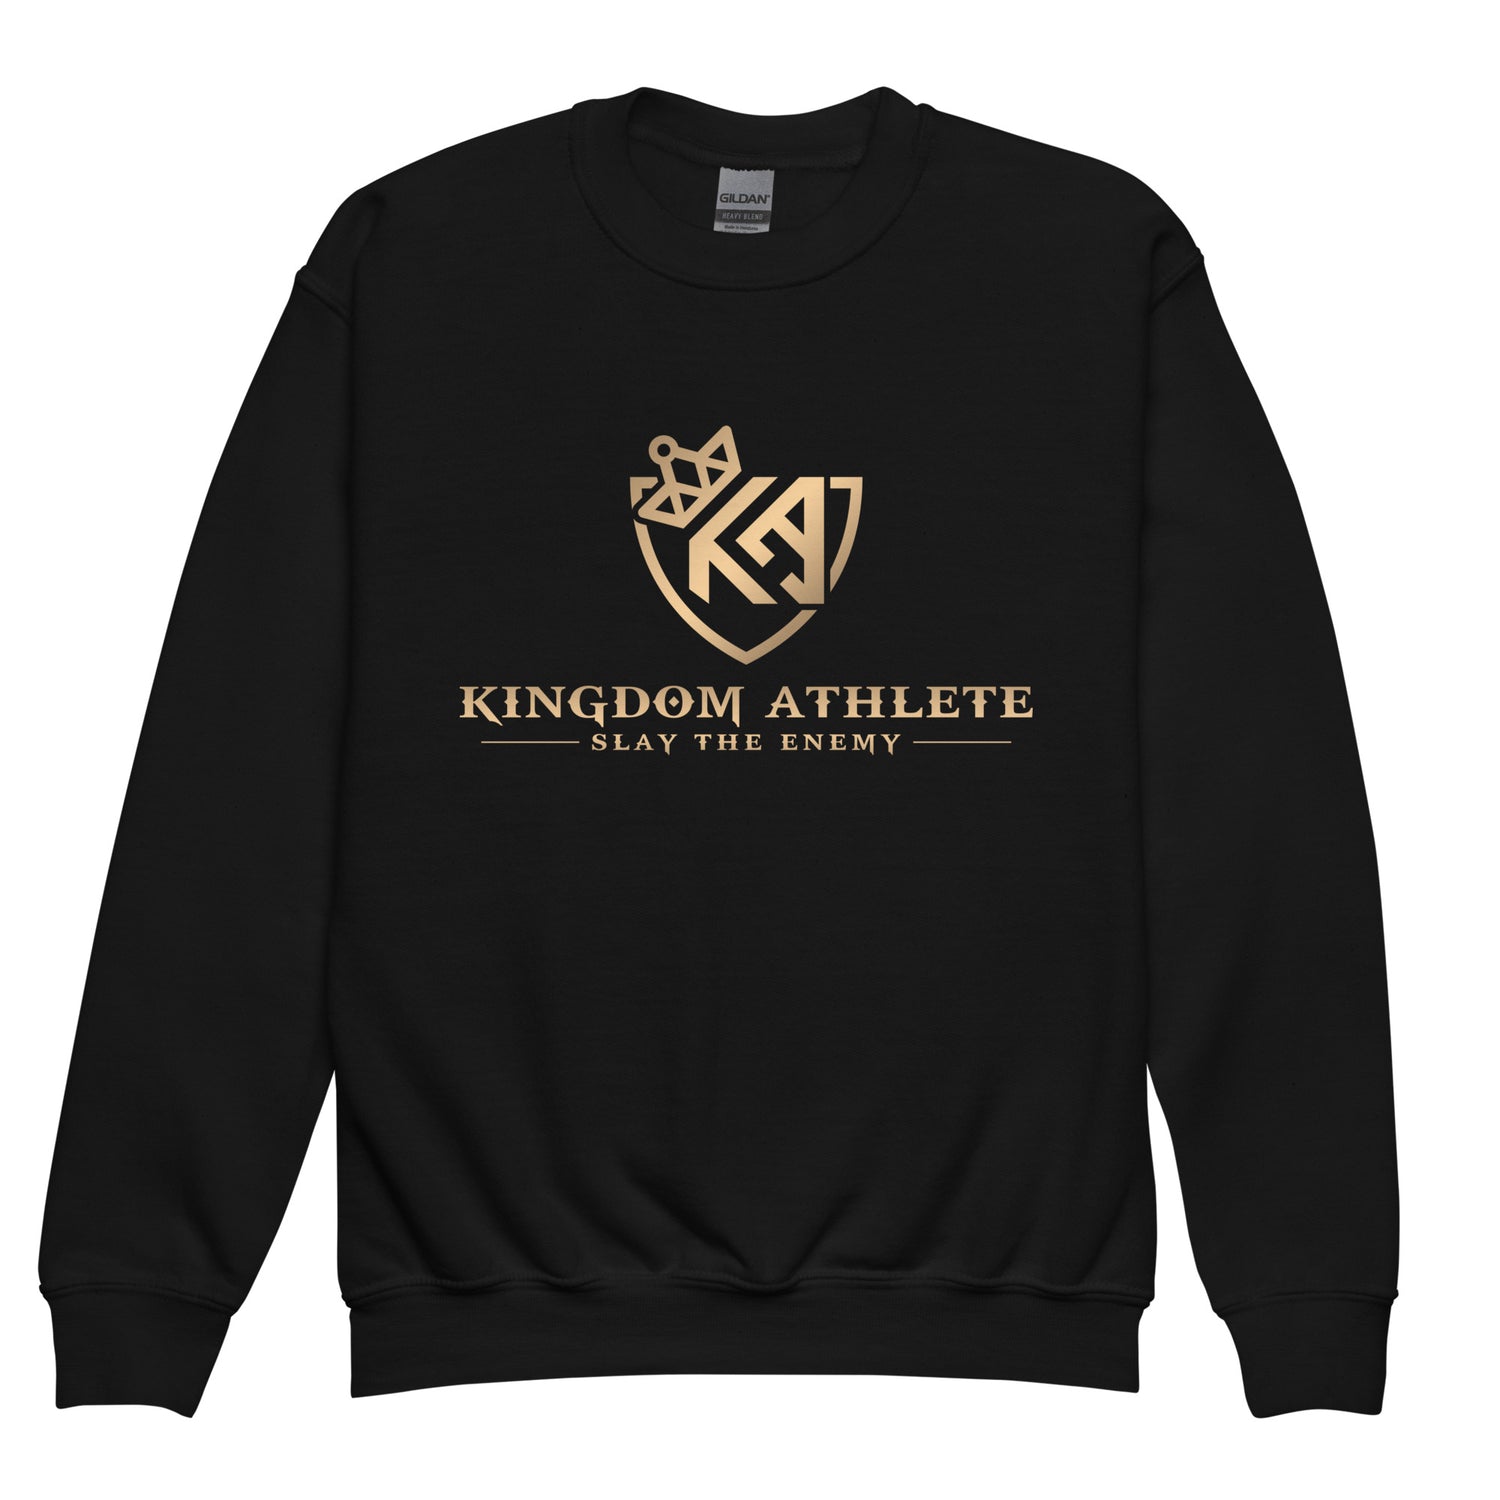 Youth crewneck sweatshirt - kingdom athlete s